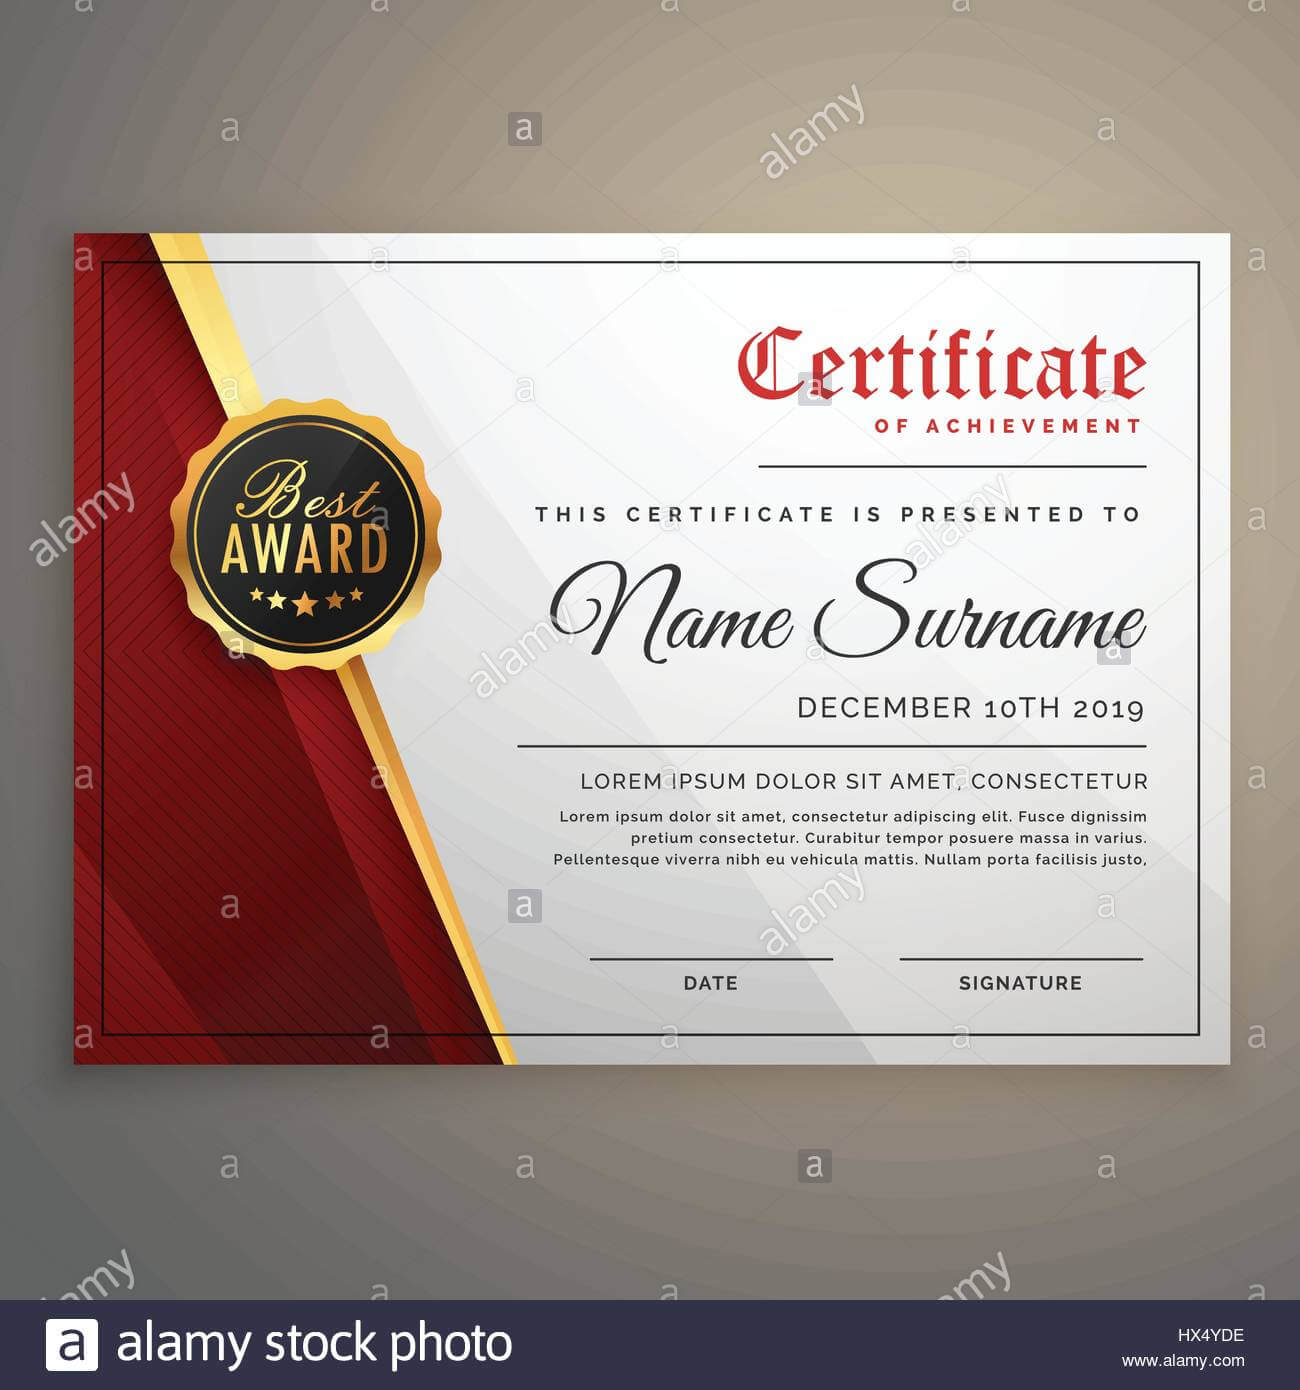 Beautiful Certificate Template Design With Best Award Symbol With Beautiful Certificate Templates